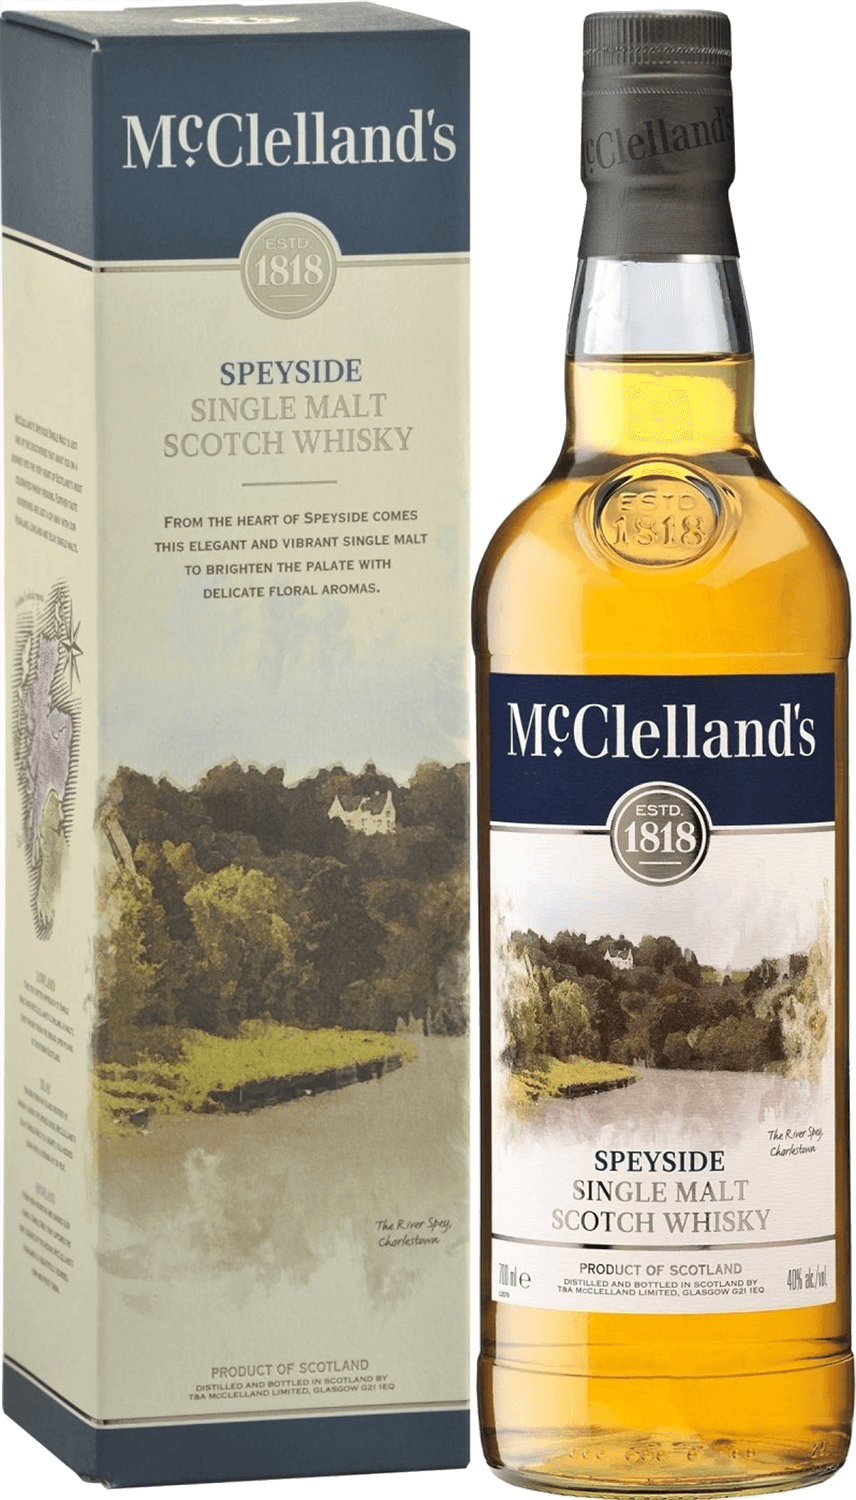 McClelland's Speyside single malt scotch whisky (gift box) auchentoshan american oak single malt scotch whisky gift box